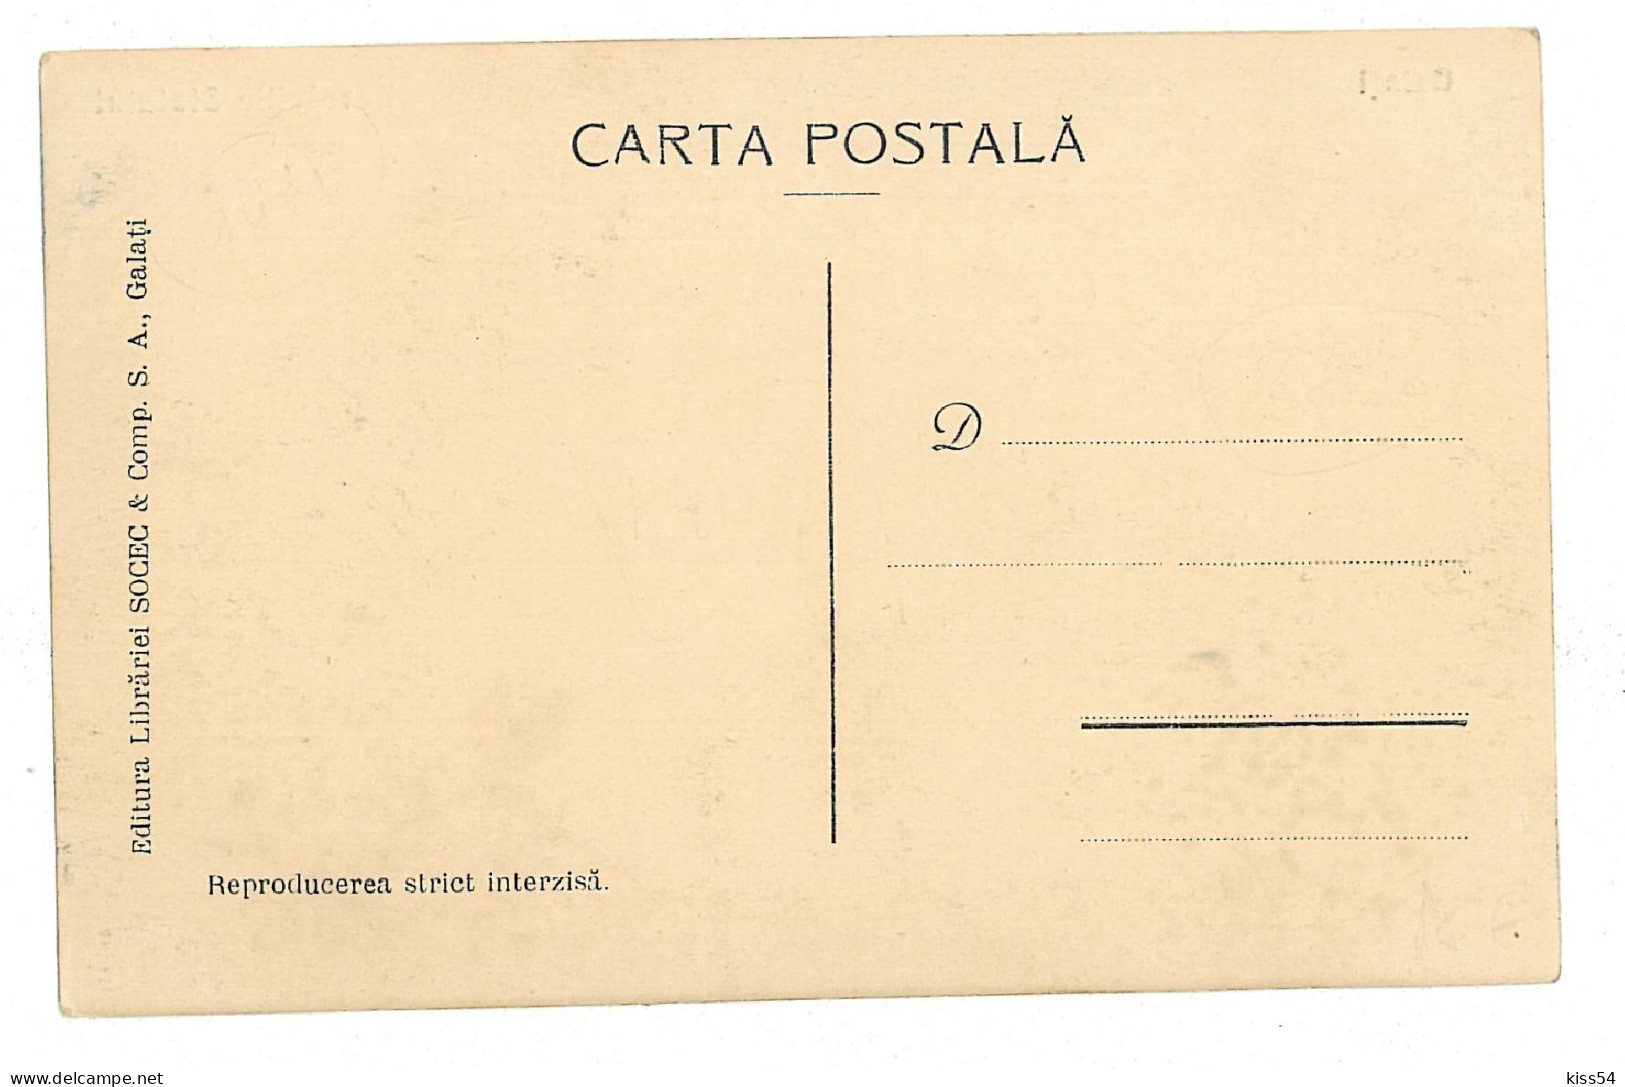 RO 83 - 2752 GALATI, Pescariile, Romania - Old Postcard - Unused - Romania